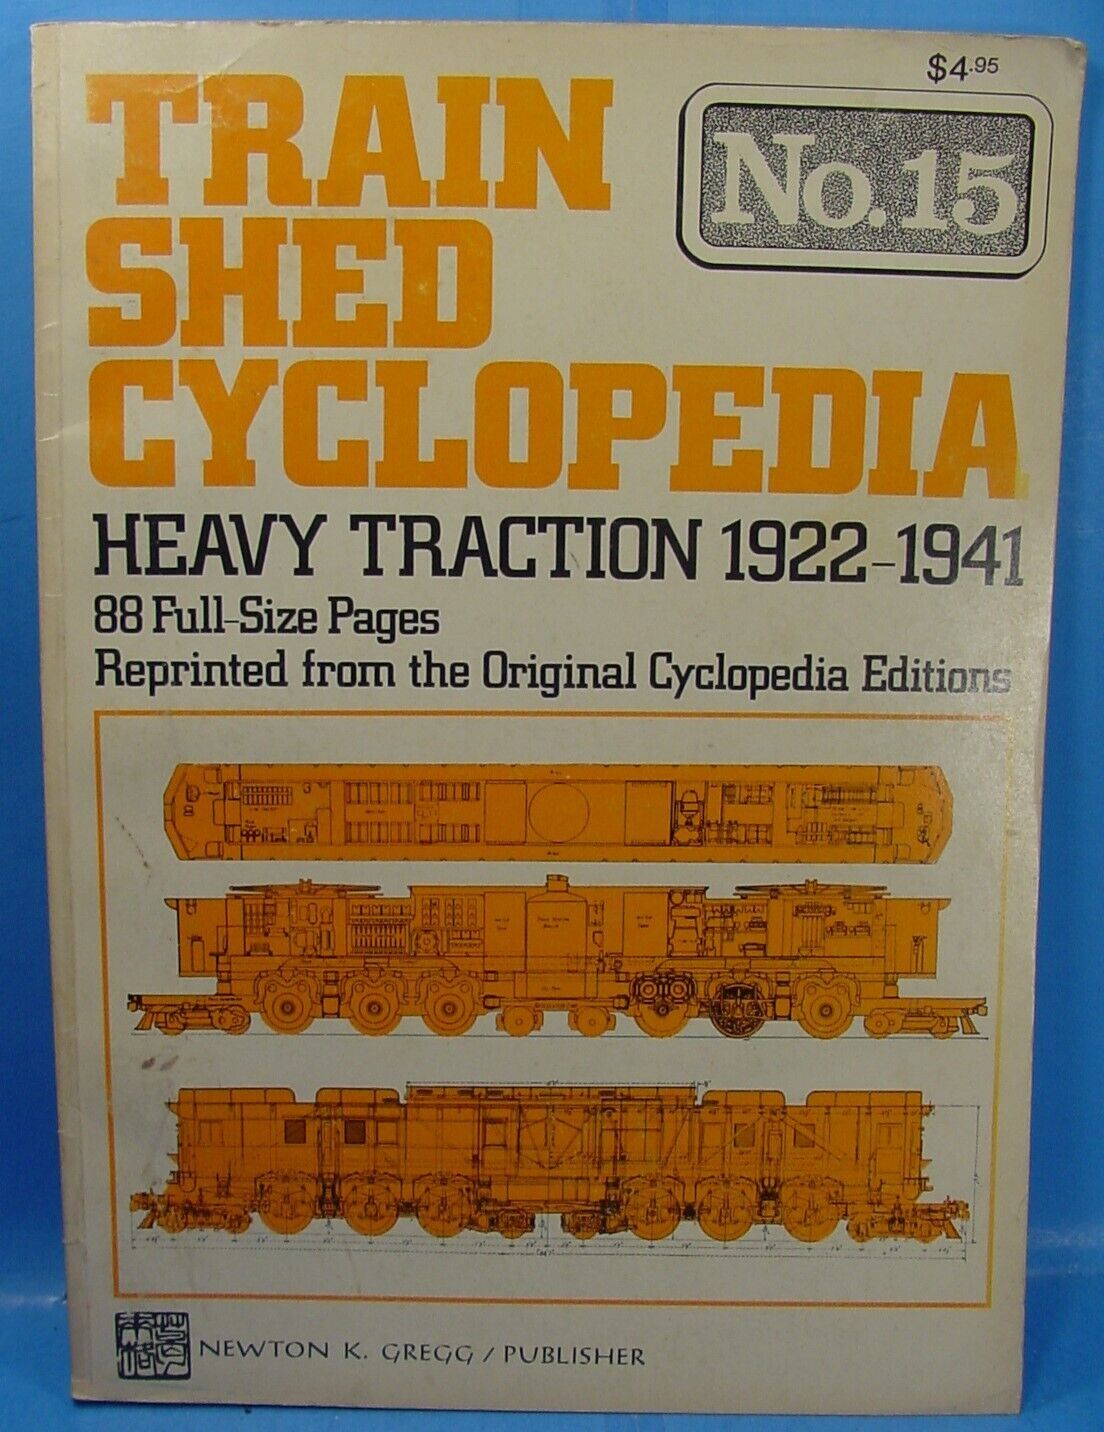 TRAIN SHED CYCLOPEDIA NO 15 HEAVY TRACTION 1922-1941 PRINTED JANUARY 1974